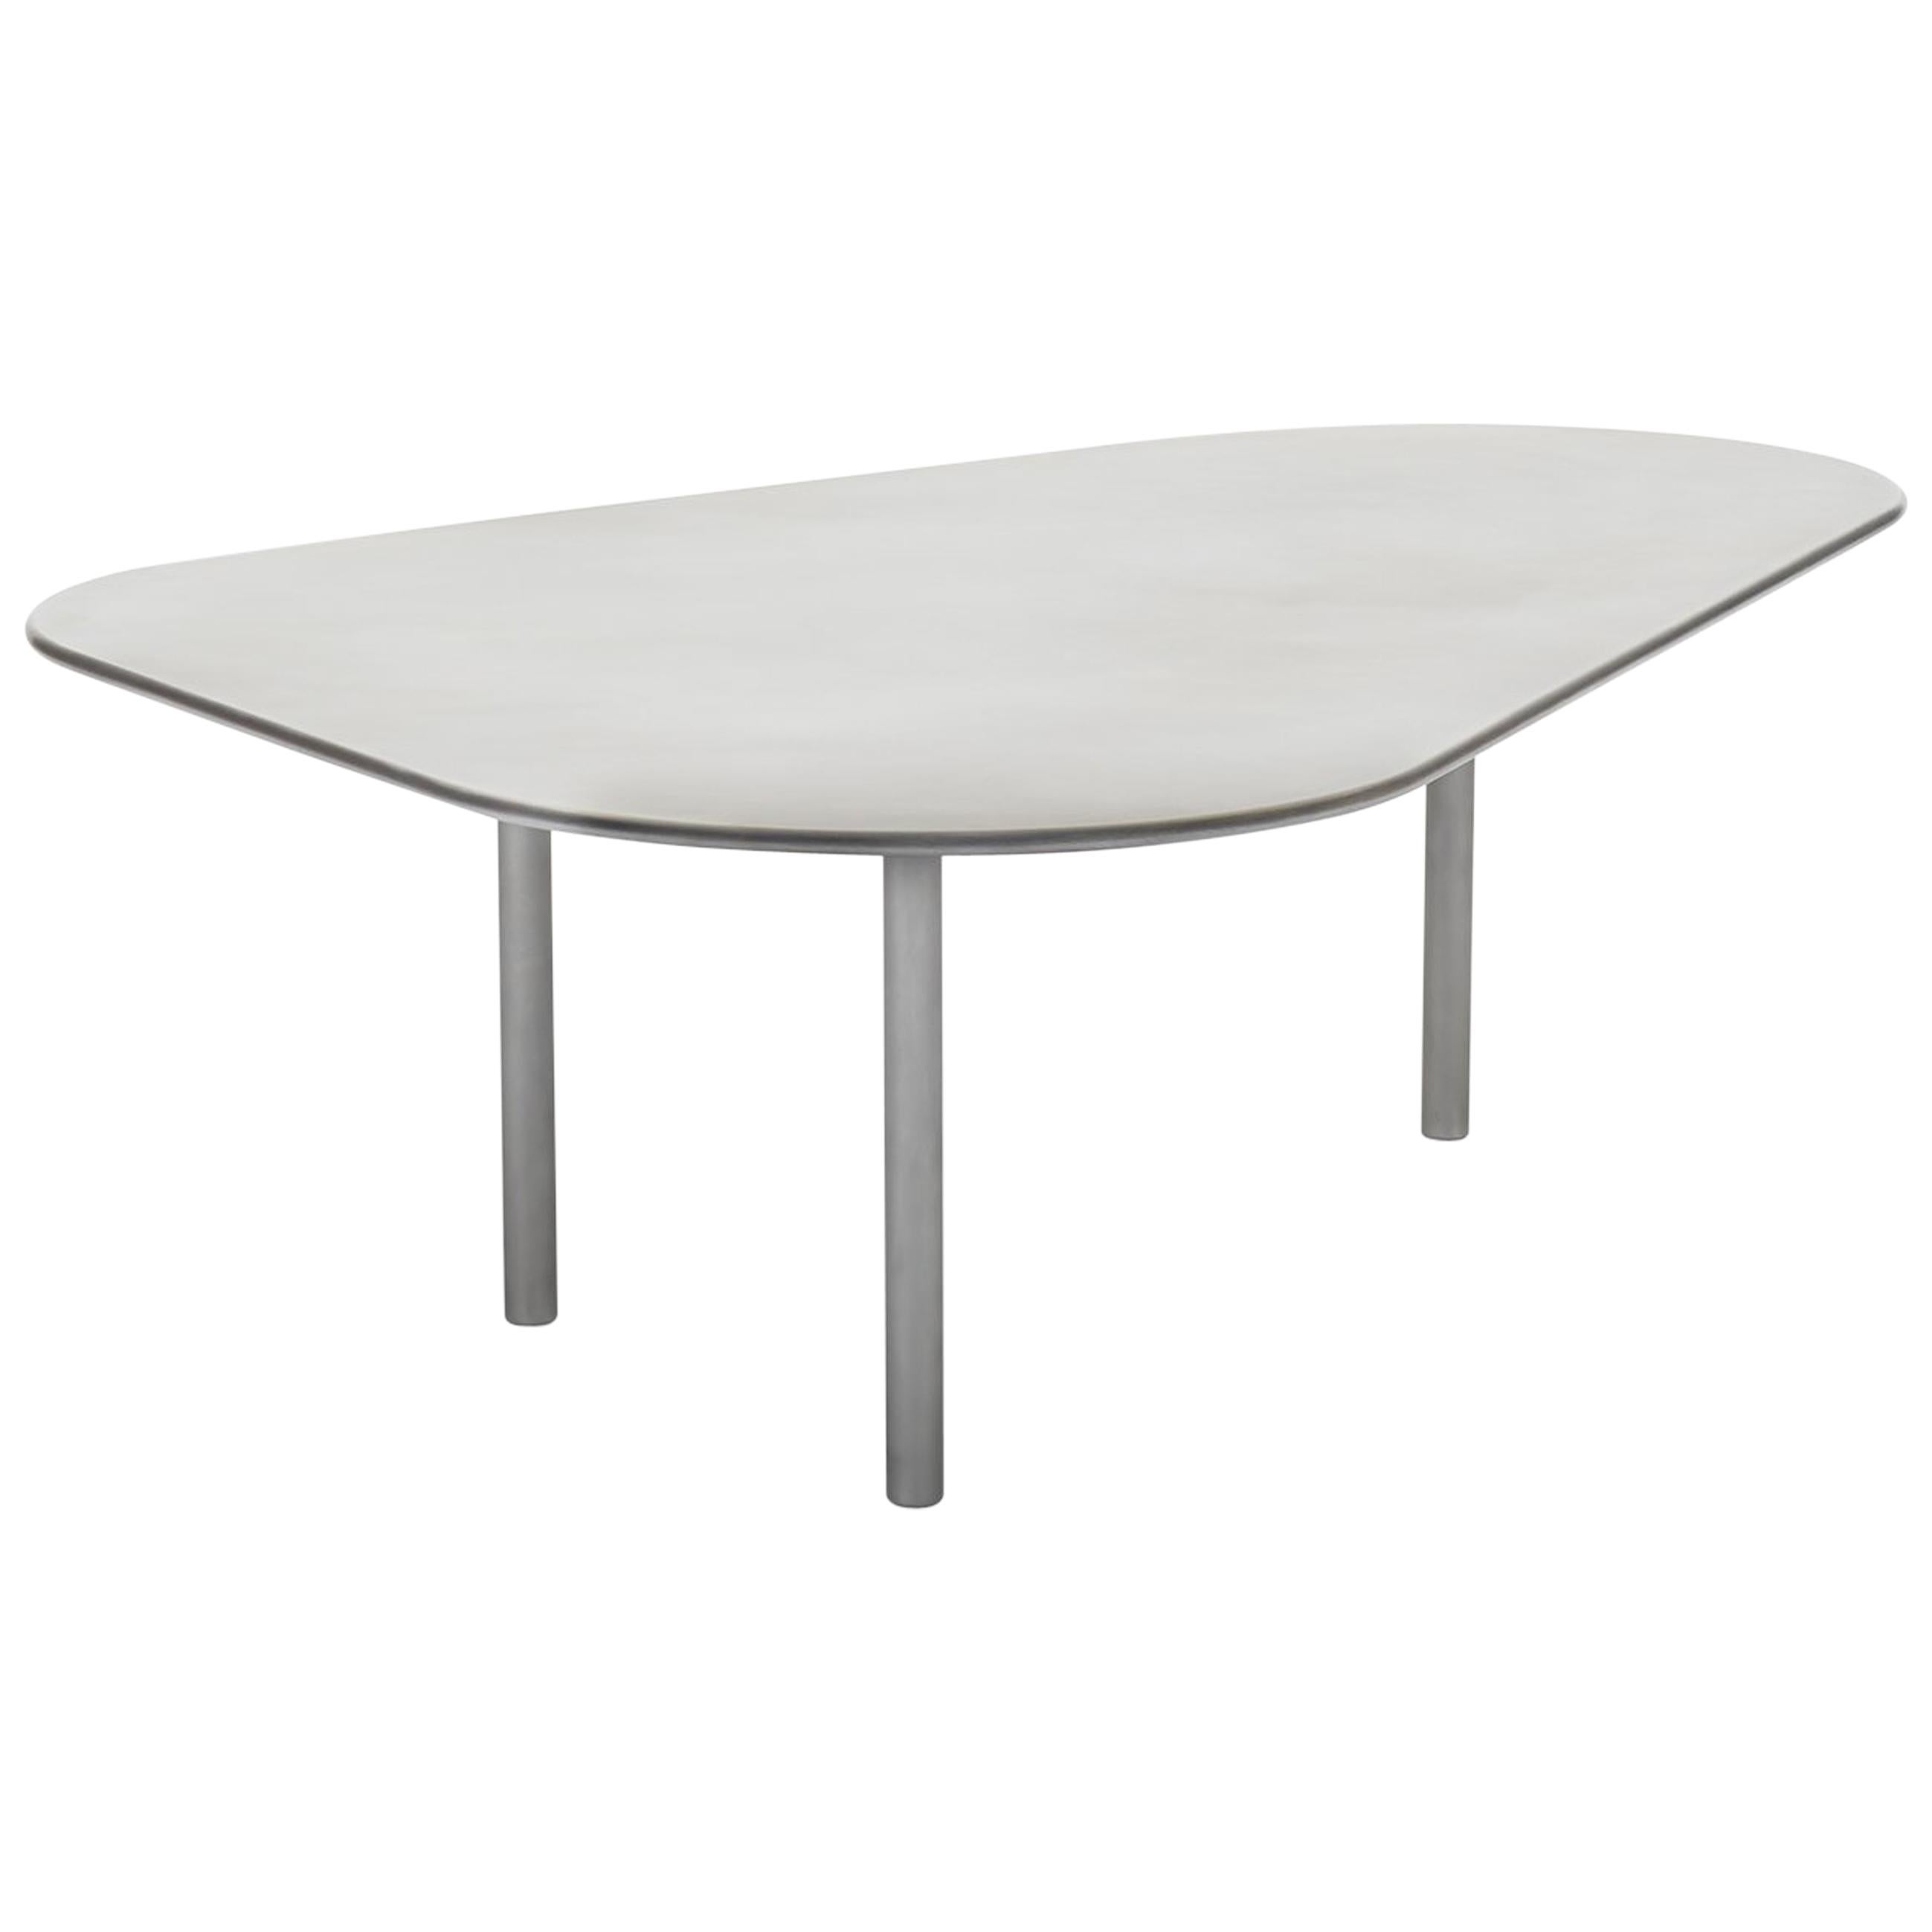 S.C.T. 'Square, Circle, Triangle' Aluminum Table by Jonathan Nesci 'Triangle'